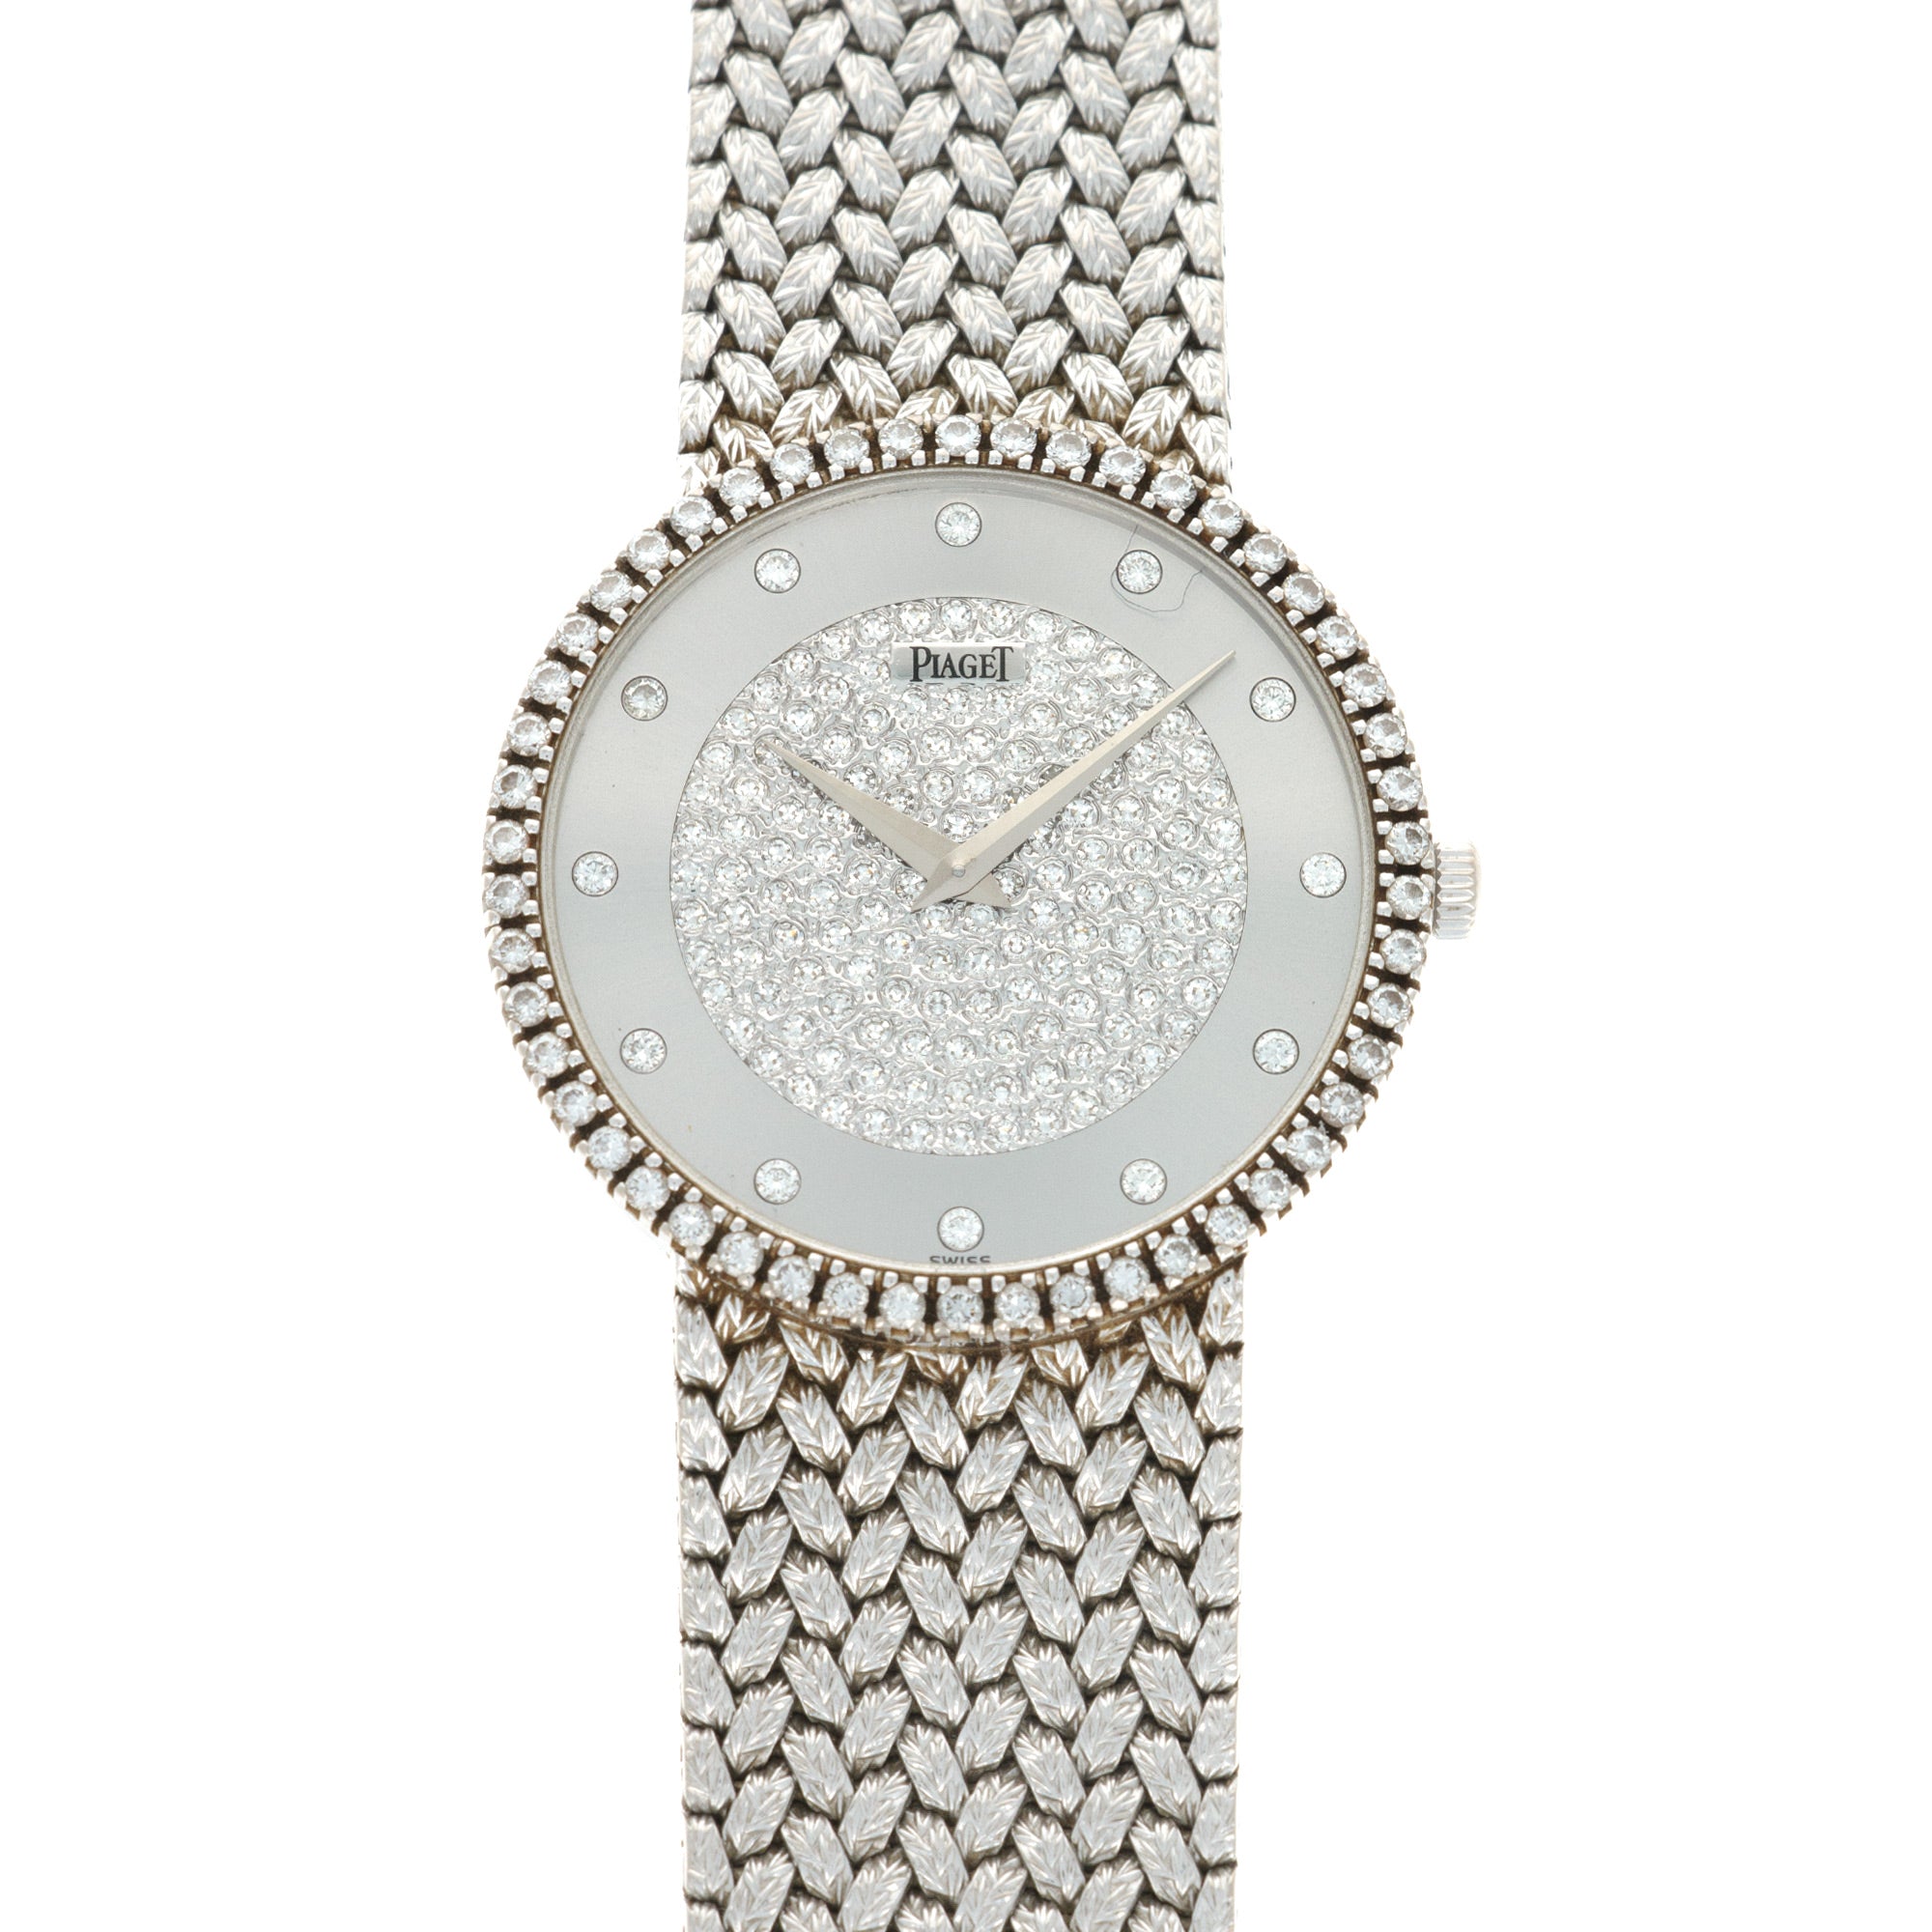 Piaget - Piaget White Gold Diamond Watch, 1980s - The Keystone Watches